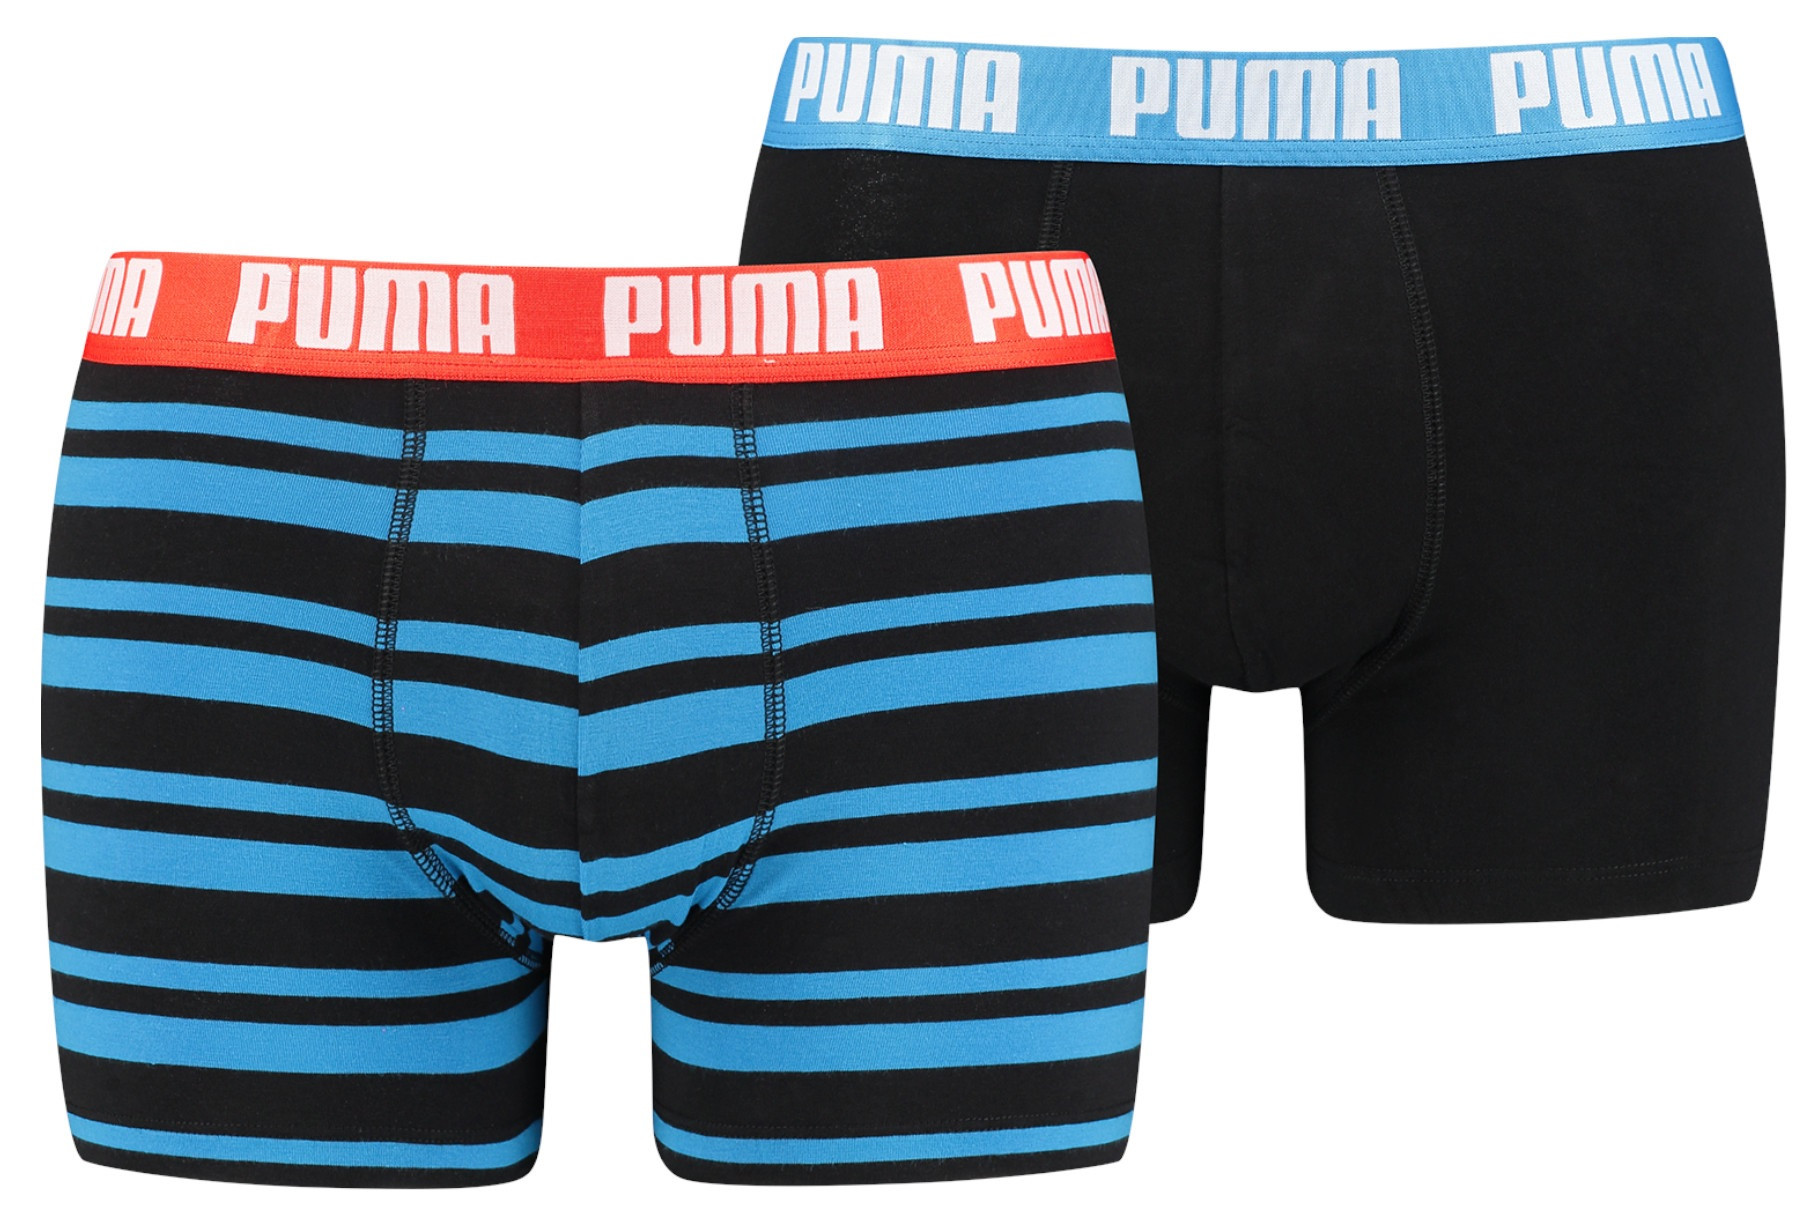 2PACK men's Puma multicolored boxers (601015001 013)